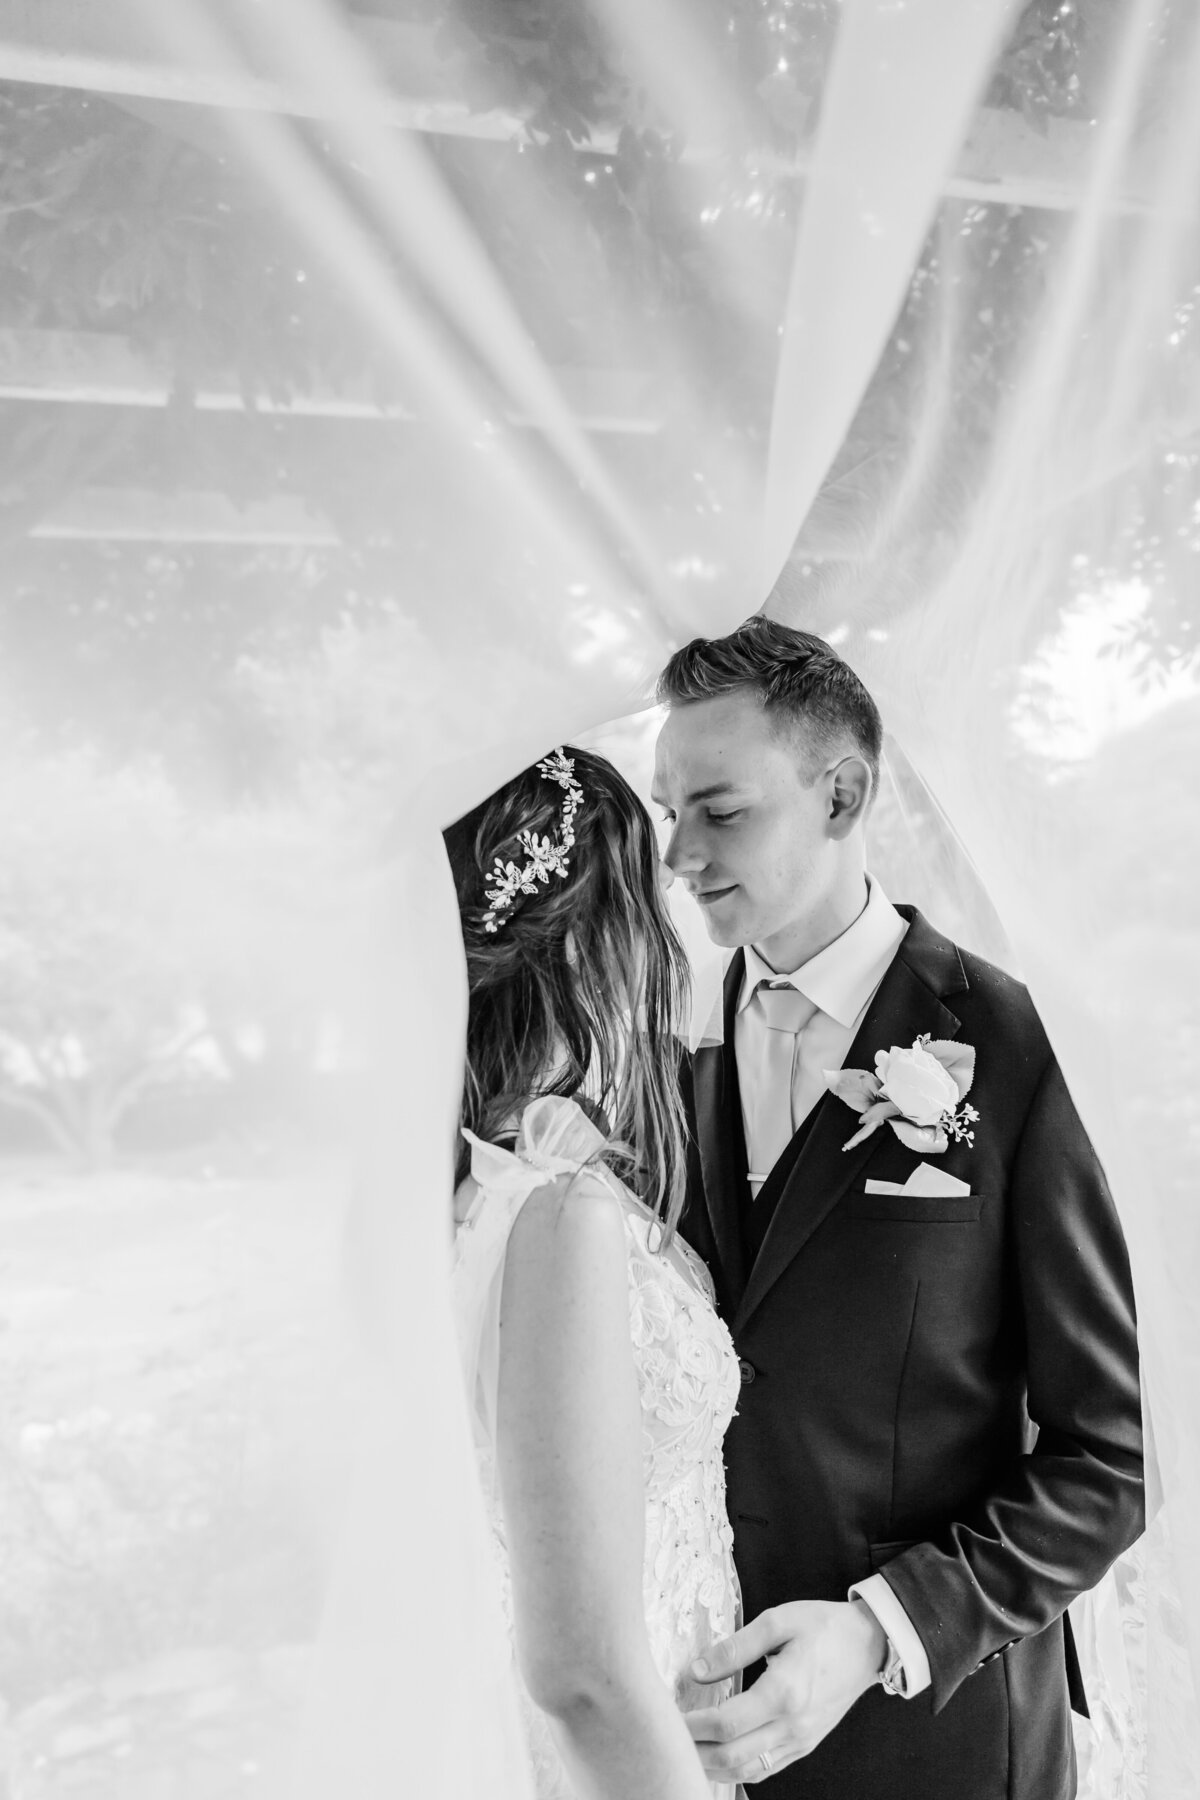 Best wedding photographer Canberra